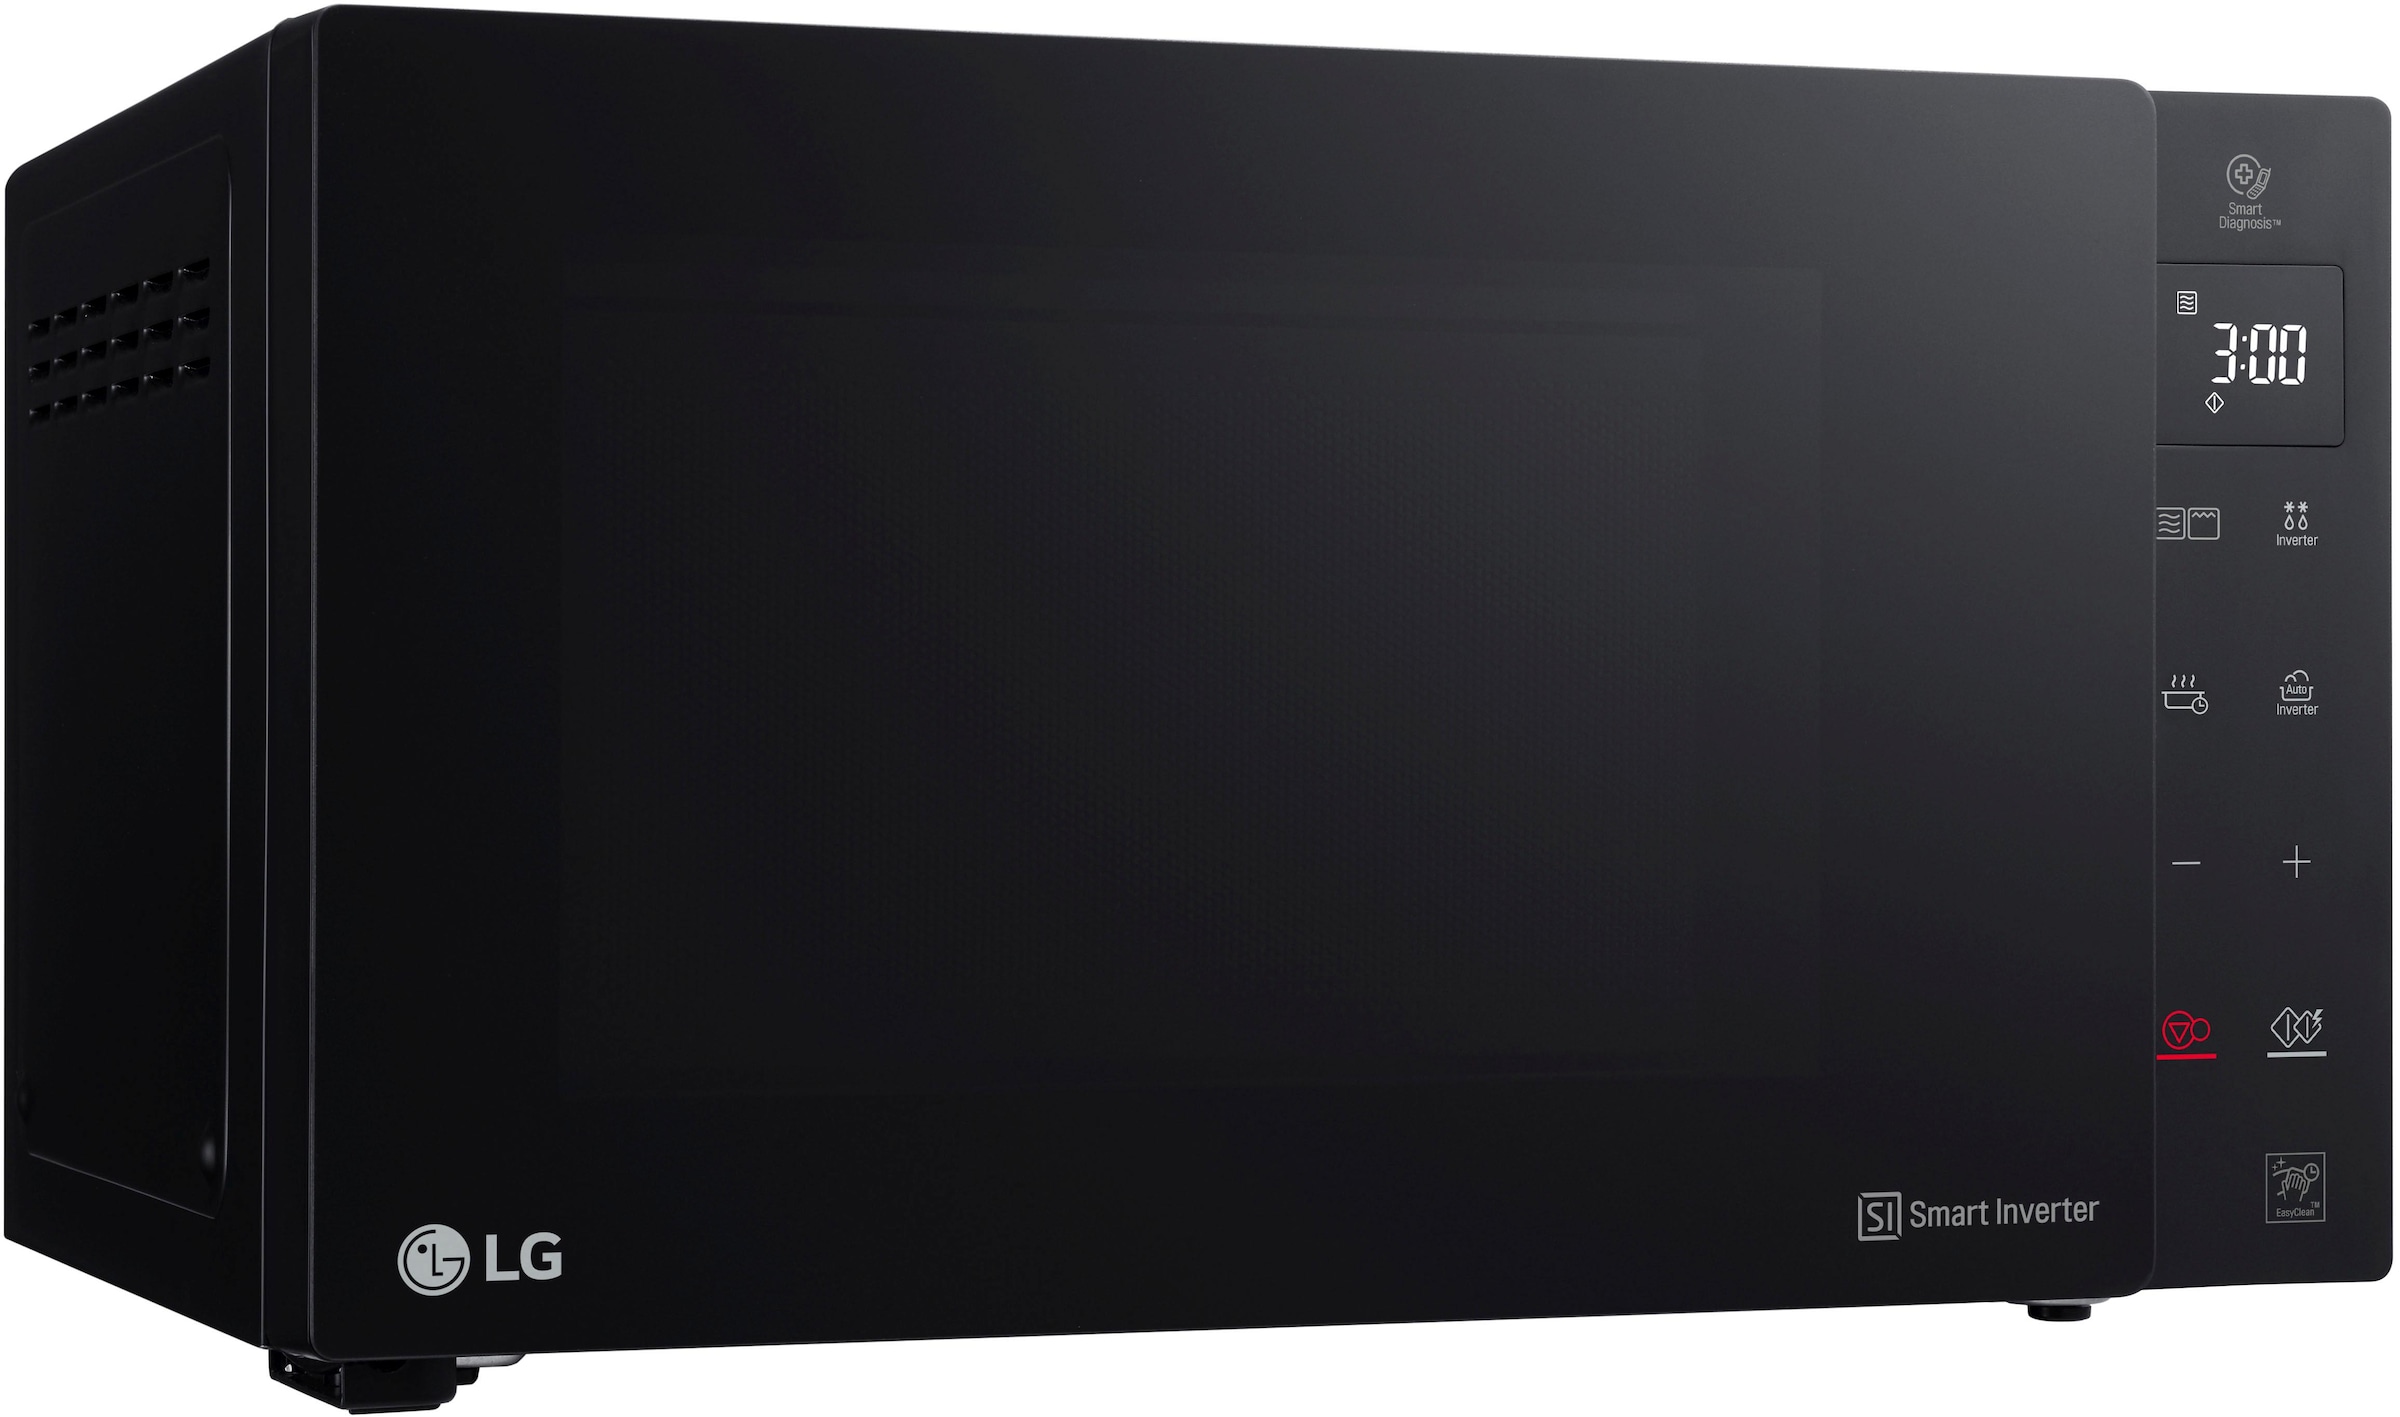 LG Mikrowelle »MH 6535 GIS«, Grill, 1000 W, Smart Inverter Technologie, echte Glasfront